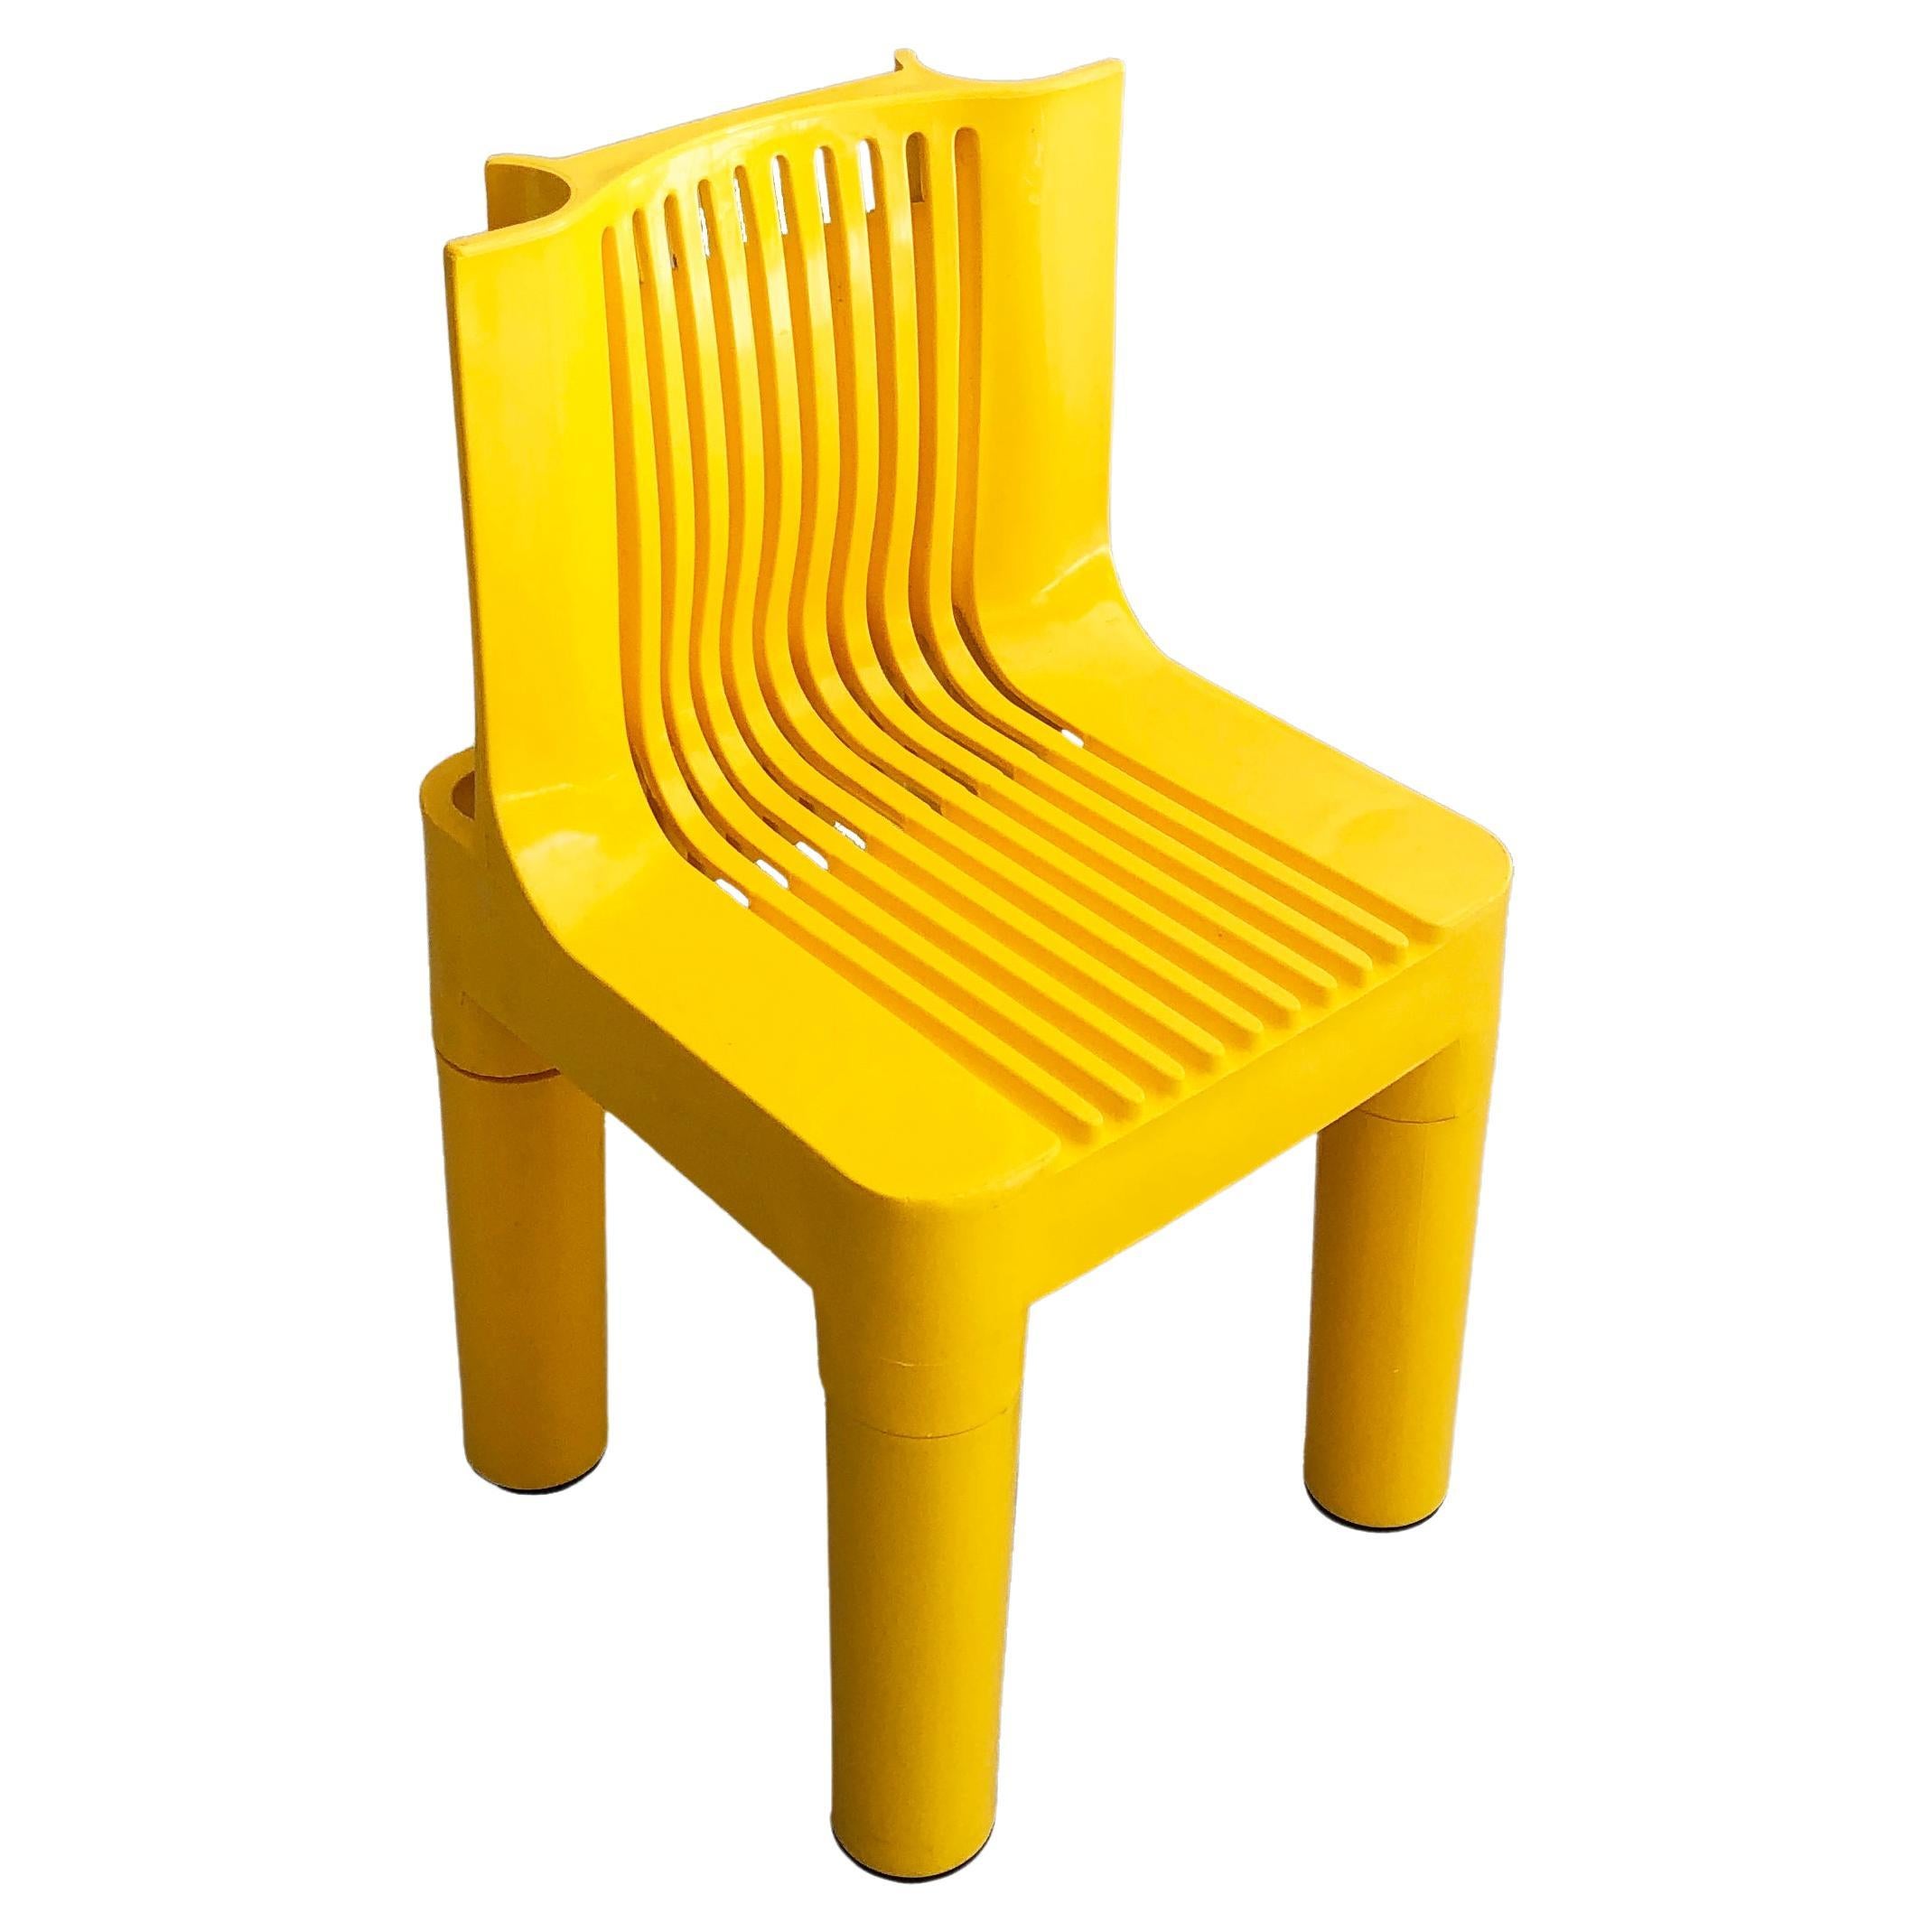 Child chair K 1340 (later 4999) Kartell Marco Zanuso / Richard Sapper 1964